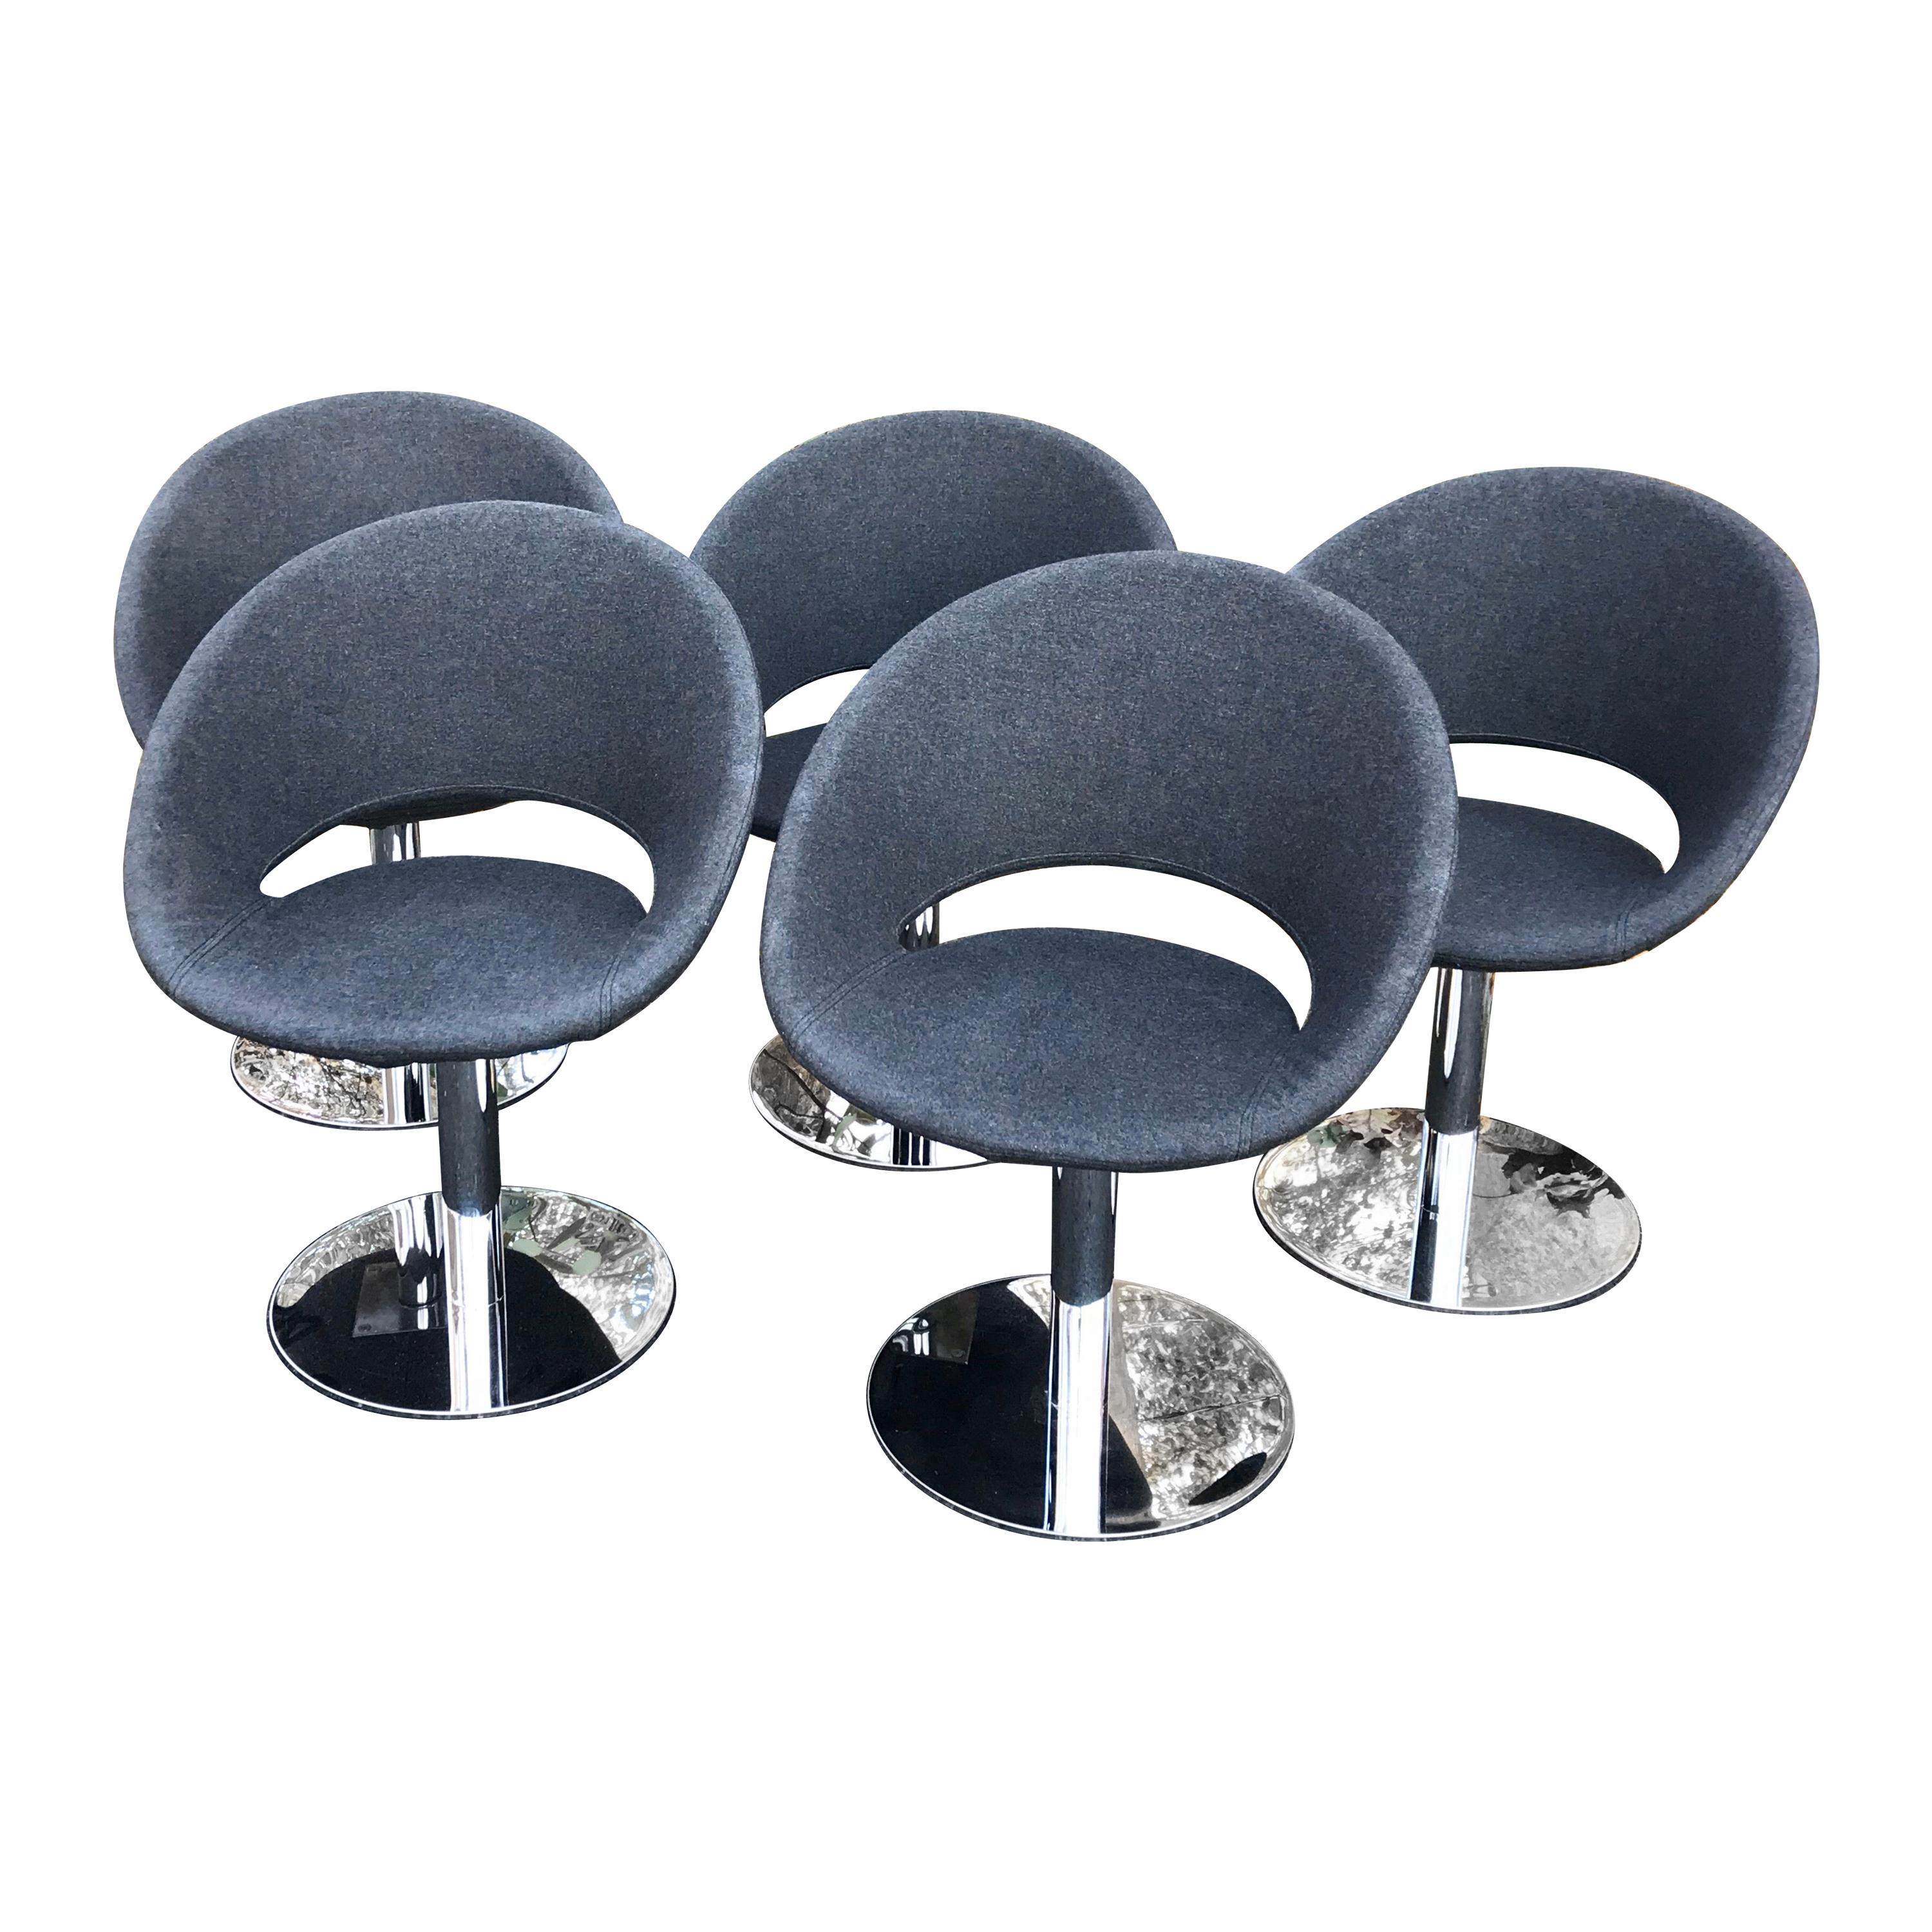 Italian Chrome Swivel Base Dining Chairs, B&B Italia Style, Charcoal Gray Fabric